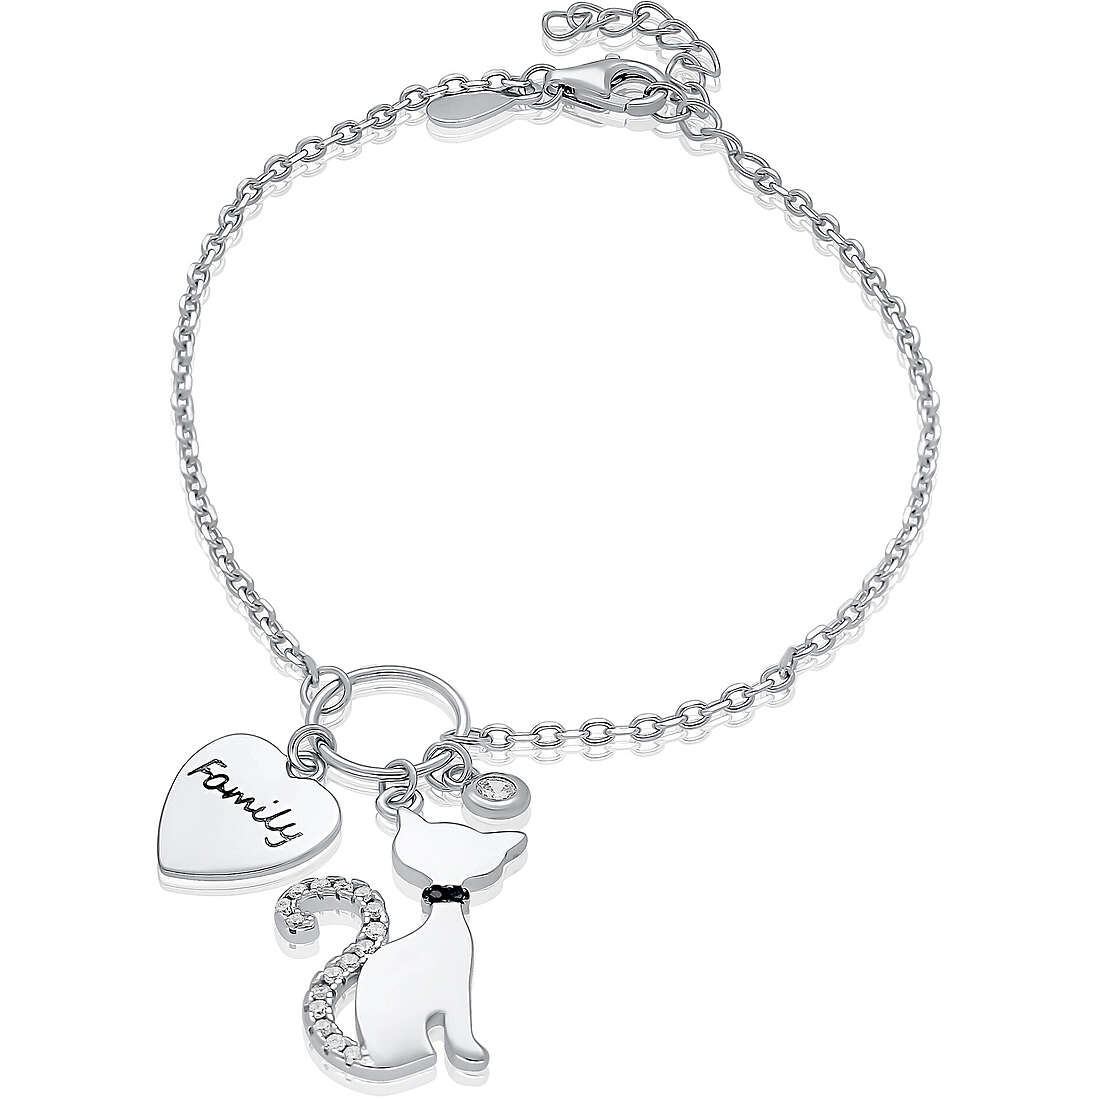 bracelet woman Charms/Beads 925 Silver jewel GioiaPura INS028BR359RHWH